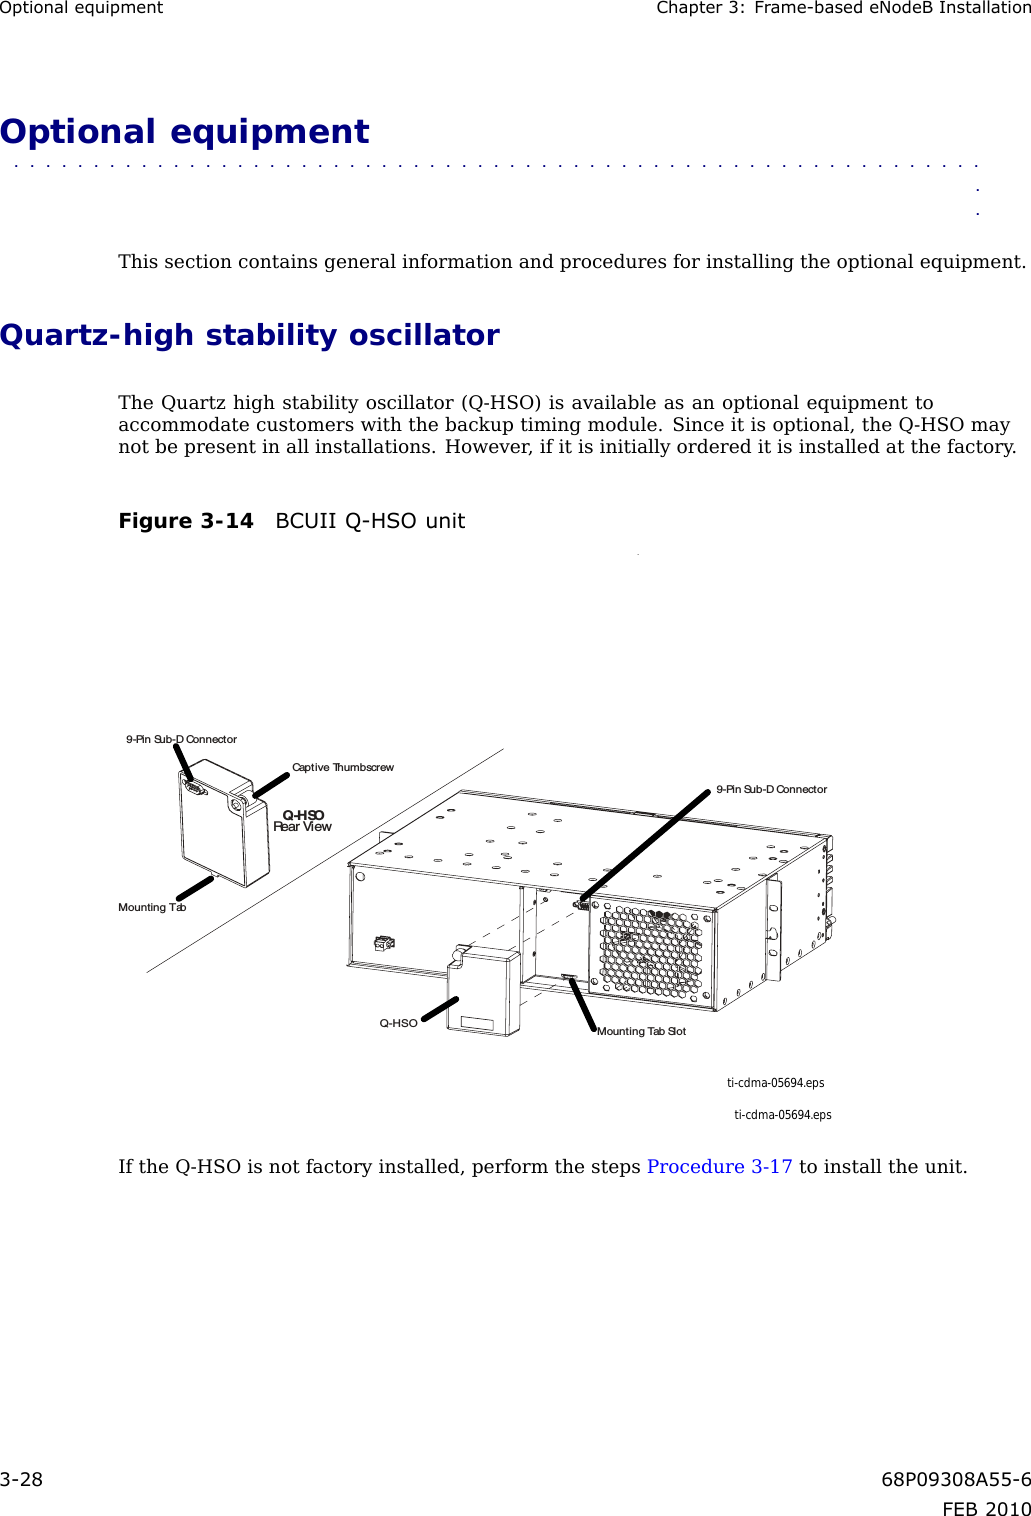 OptionalequipmentChapter3:Frame-basedeNodeBInstallationOptionalequipment■■■■■■■■■■■■■■■■■■■■■■■■■■■■■■■■■■■■■■■■■■■■■■■■■■■■■■■■■■■■■■■Thissectioncontainsgeneralinformationandproceduresforinstallingtheoptionalequipment.Quartz-highstabilityoscillatorTheQuartzhighstabilityoscillator(Q-HSO)isavailableasanoptionalequipmenttoaccommodatecustomerswiththebackuptimingmodule.Sinceitisoptional,theQ-HSOmaynotbepresentinallinstallations.However ,ifitisinitiallyordereditisinstalledatthefactory .Figure3-14BCUIIQ-HSOunitti-cdma-05694.epsti-cdma-05694.epsMounting Tab SlotQ-HSOQ-HSORear View9-Pin Sub-D Connector9-Pin Sub-D ConnectorCaptive ThumbscrewMounting TabIftheQ-HSOisnotfactoryinstalled,performthestepsProcedure3-17toinstalltheunit.3-2868P09308A55-6FEB2010